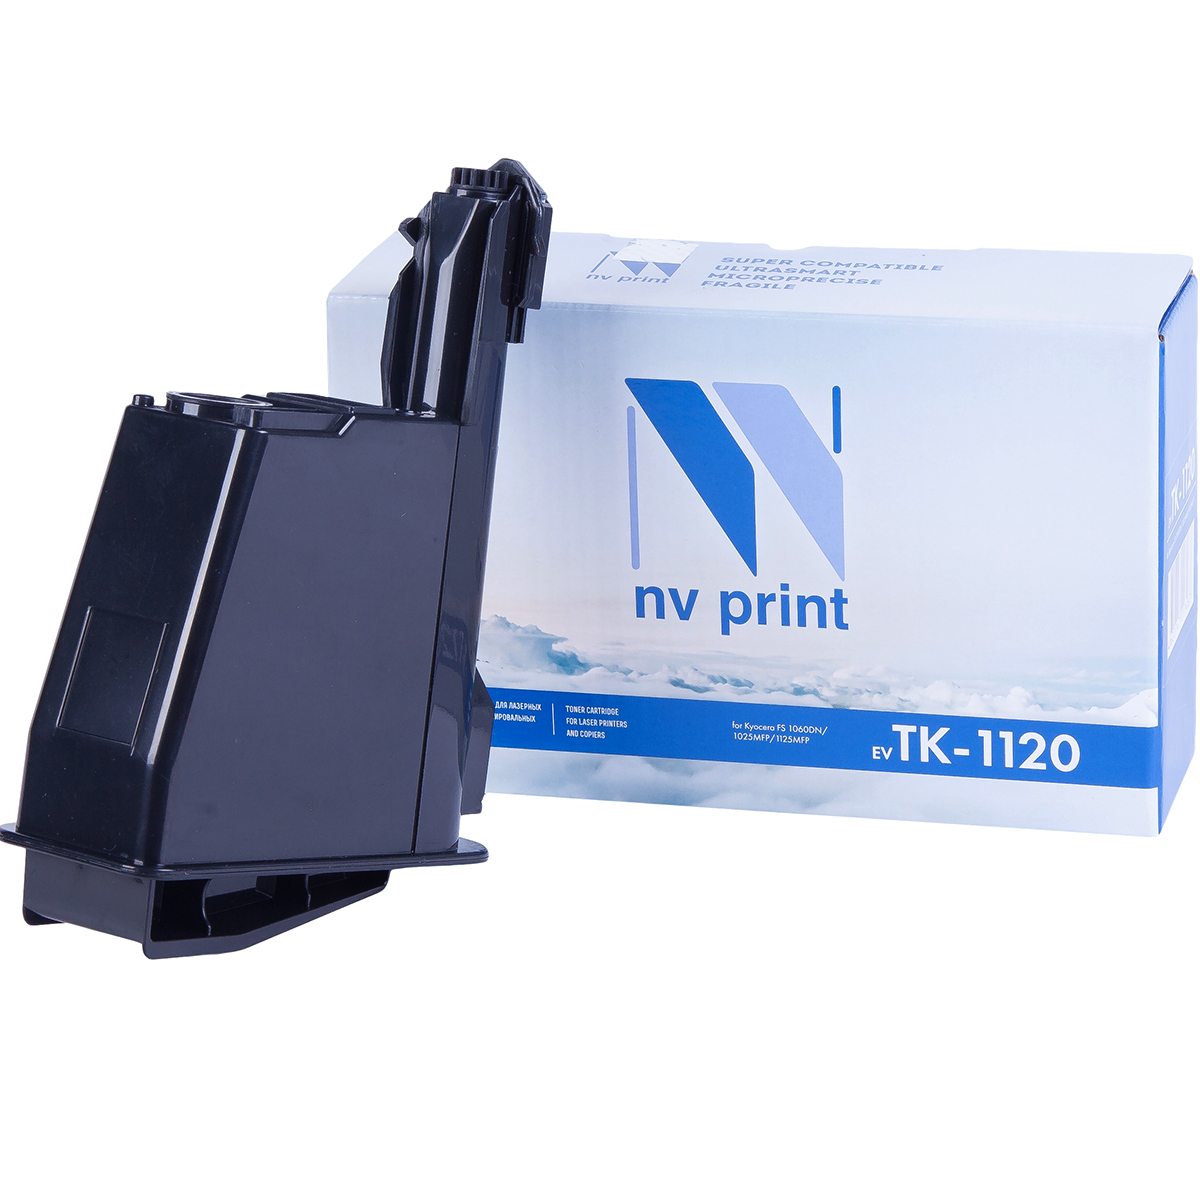 Картридж NV Print TK-1120 для Kyocera FS1060DN/1025MFP/1125MFP (3000k) запчасть kyocera узел фиксации fk 1120 fs 1060dn 1025mfp 1125mfp 302m393014 302m393010 302m393012 302m393013